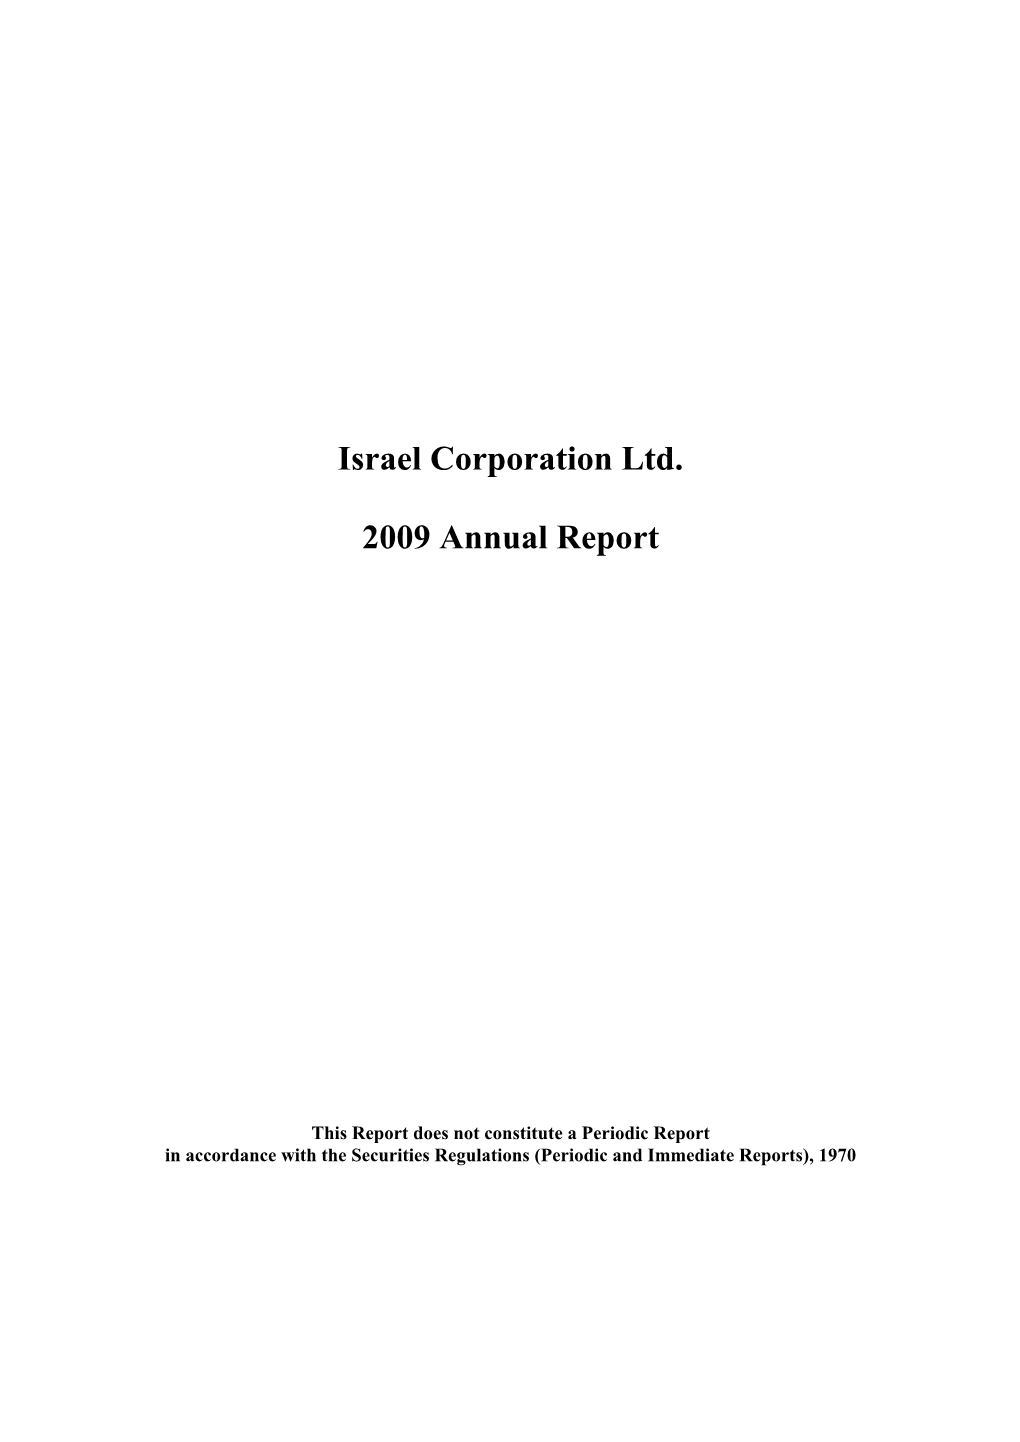 Israel Corporation Ltd. 2009 Annual Report